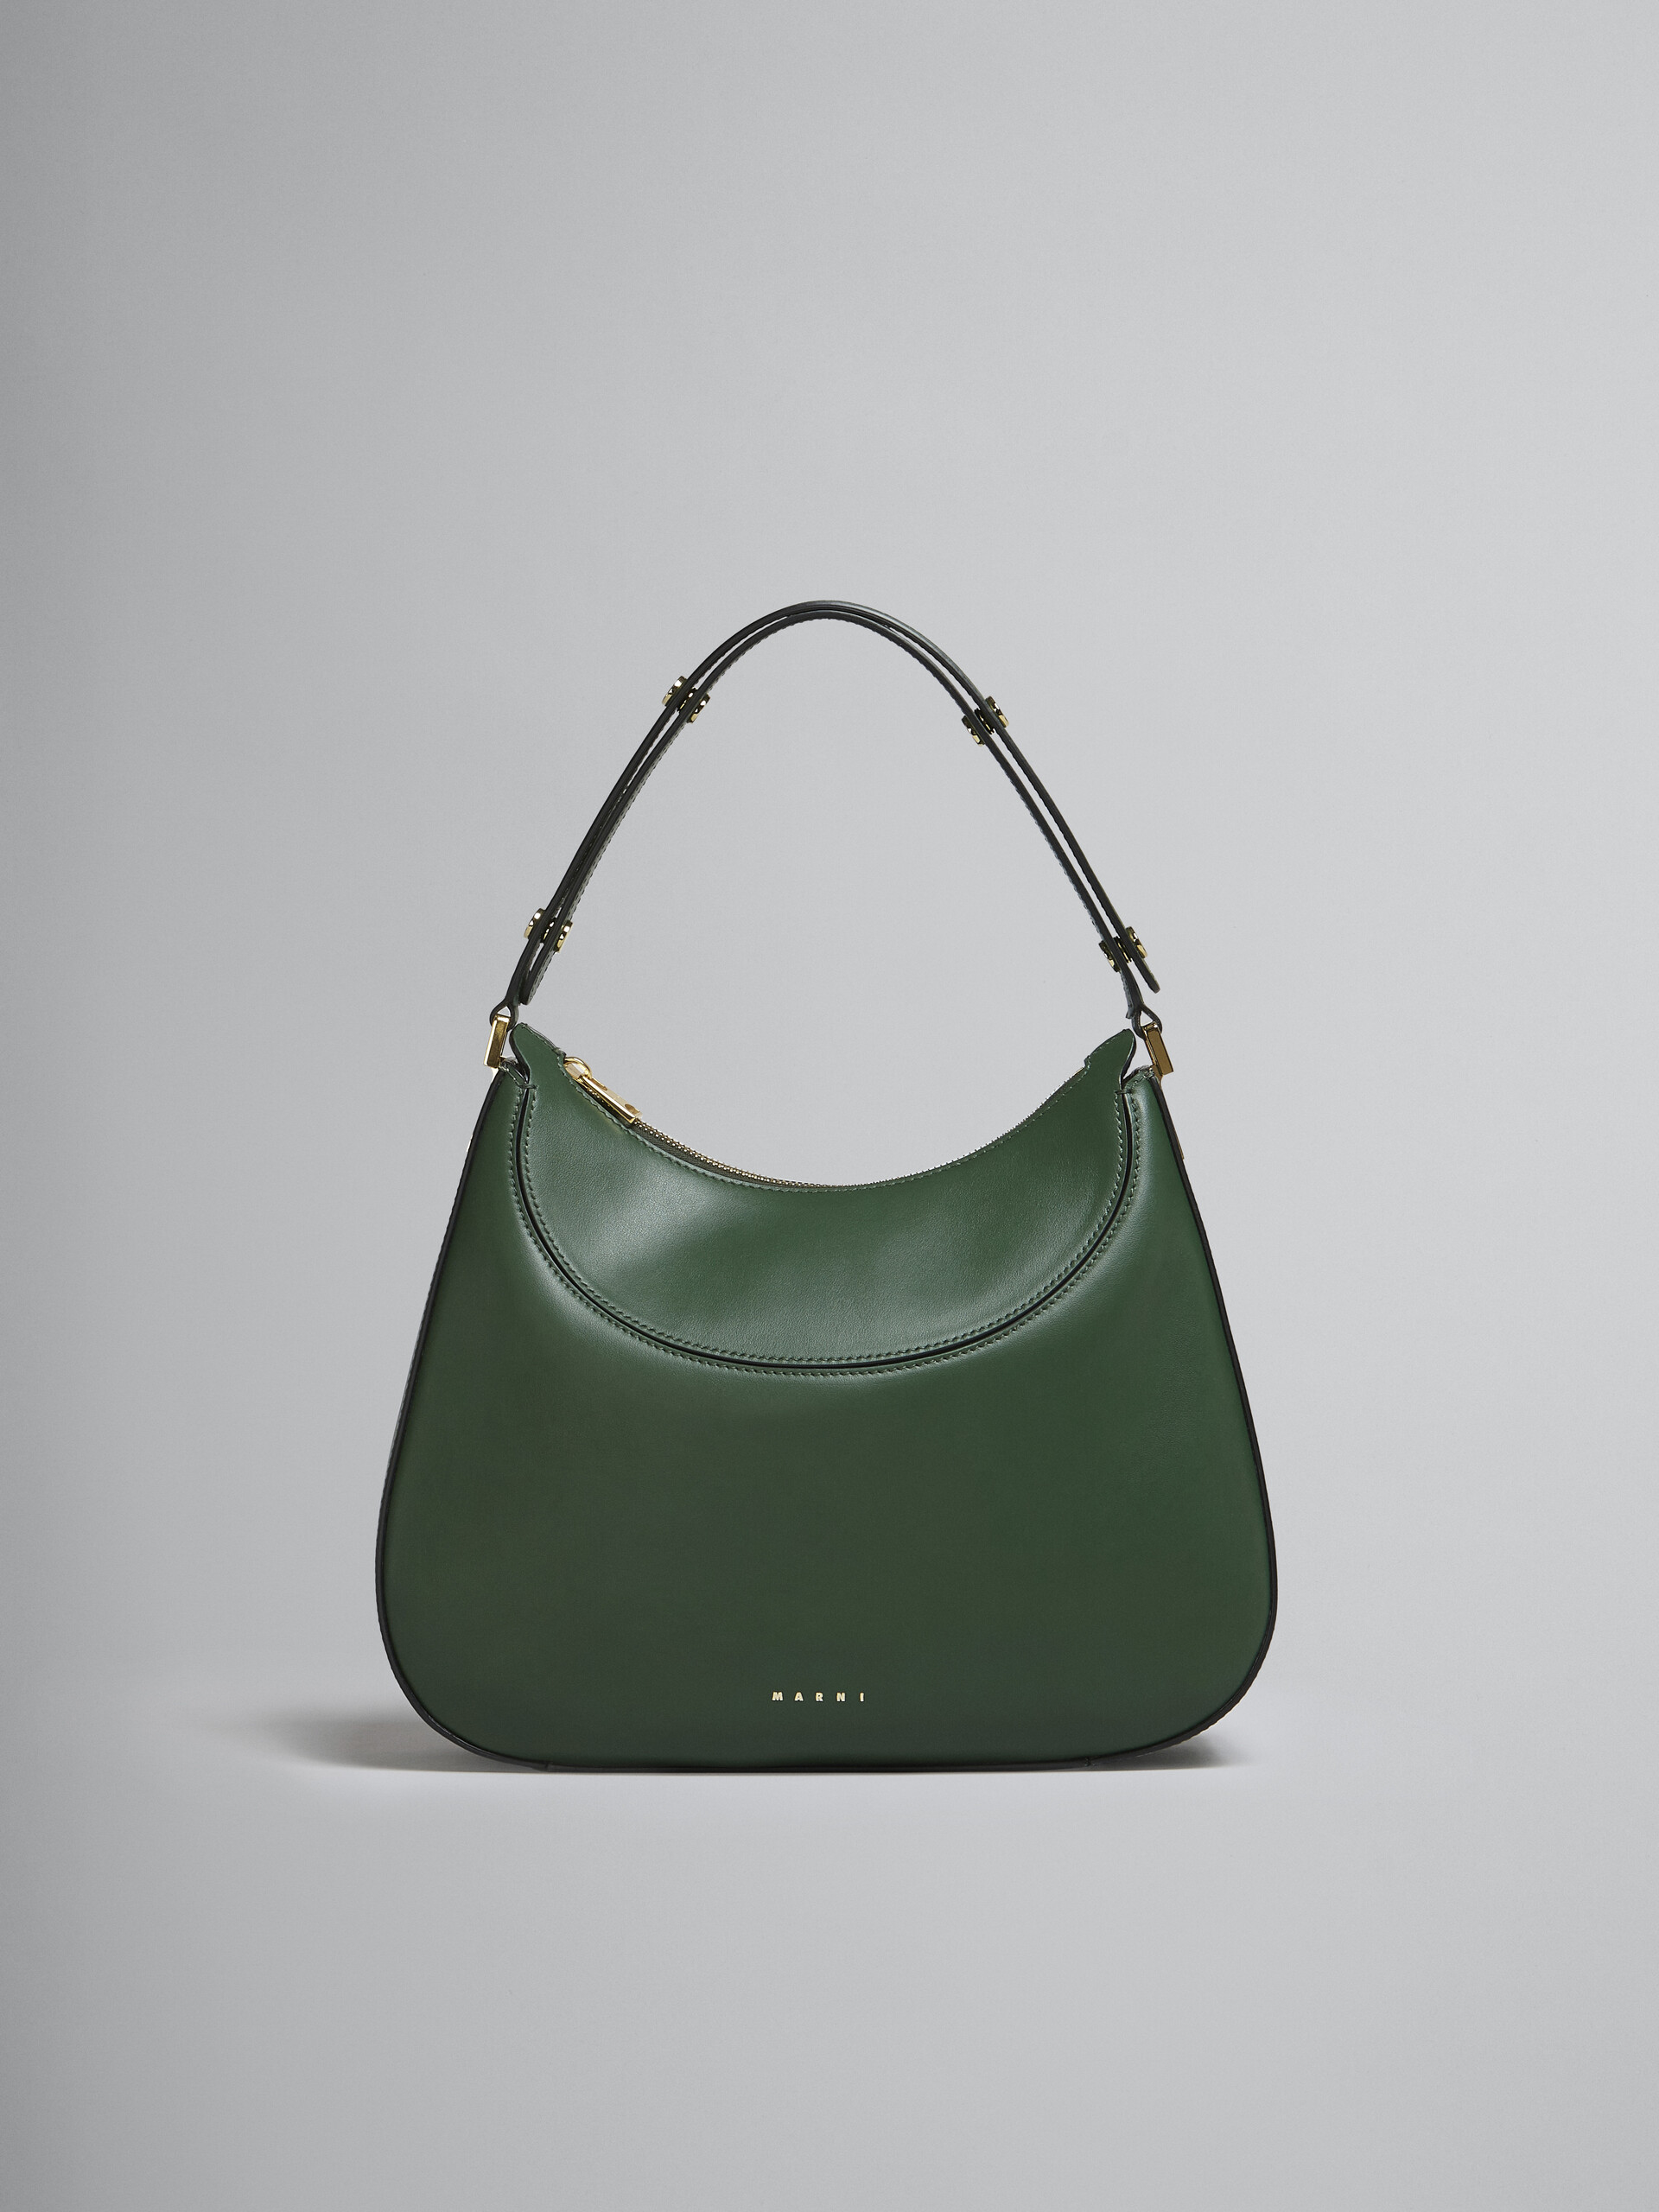 Milano bag grande in pelle verde - Borse a mano - Image 1